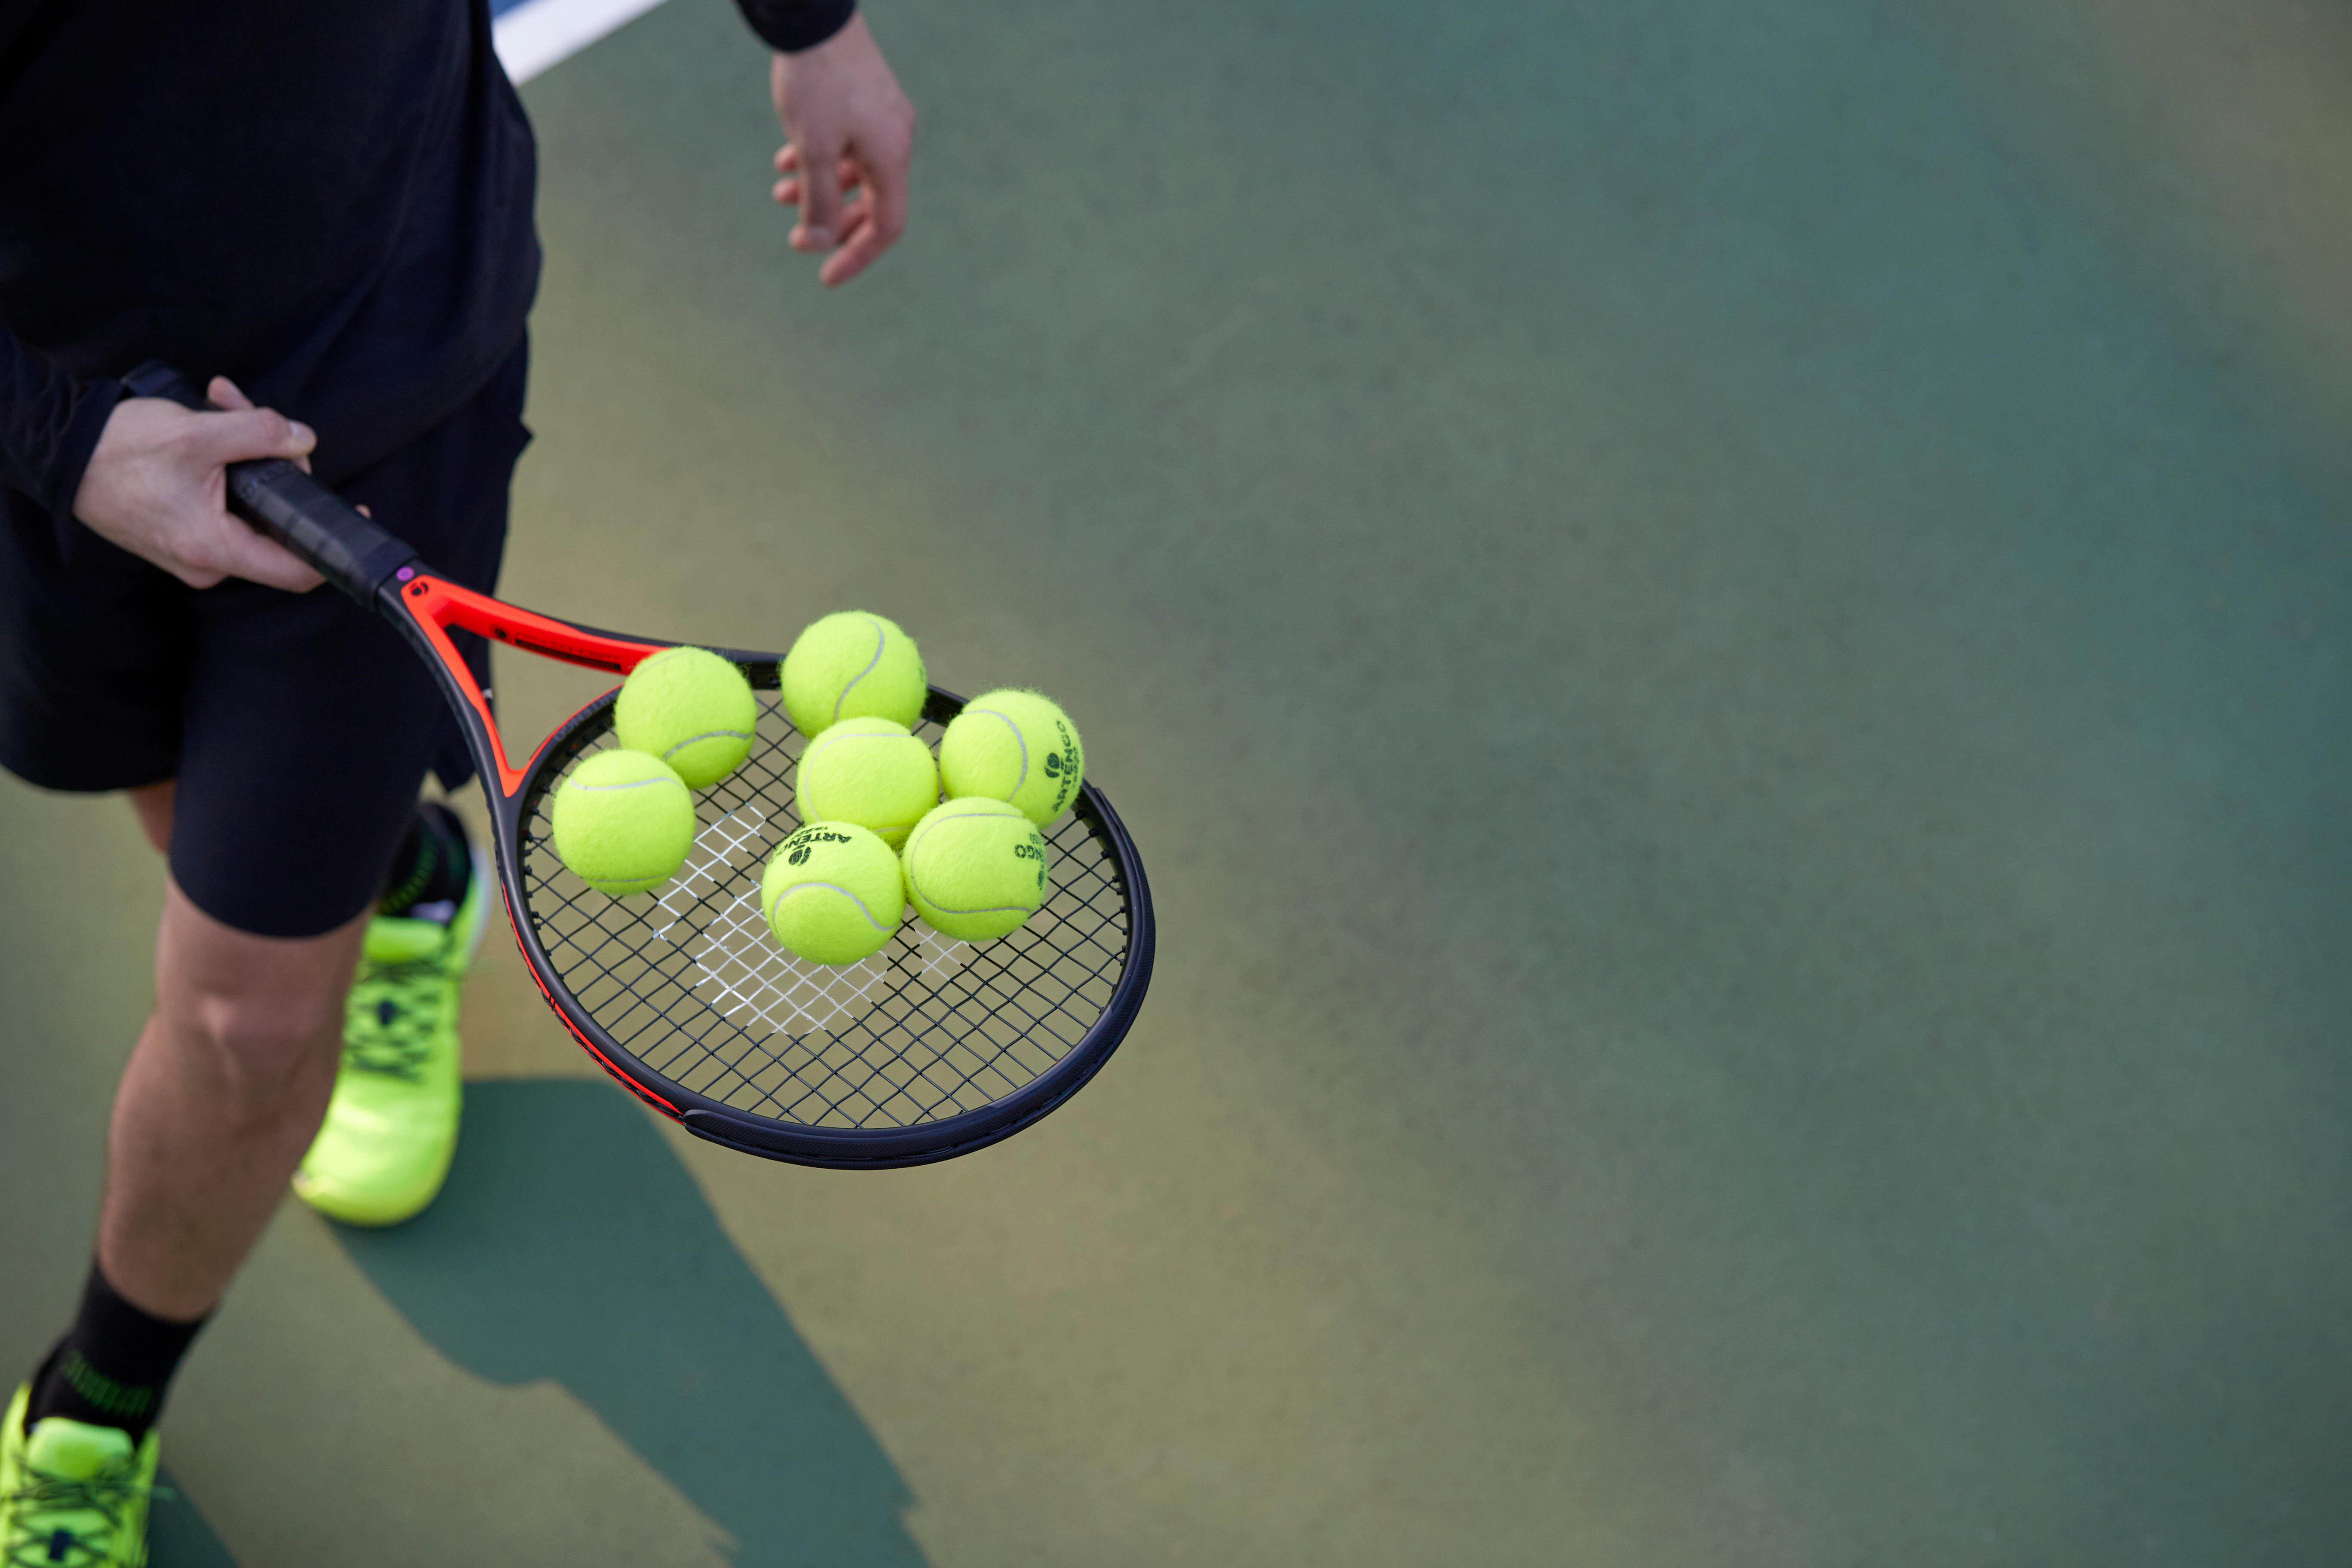 Tennis Club essentials